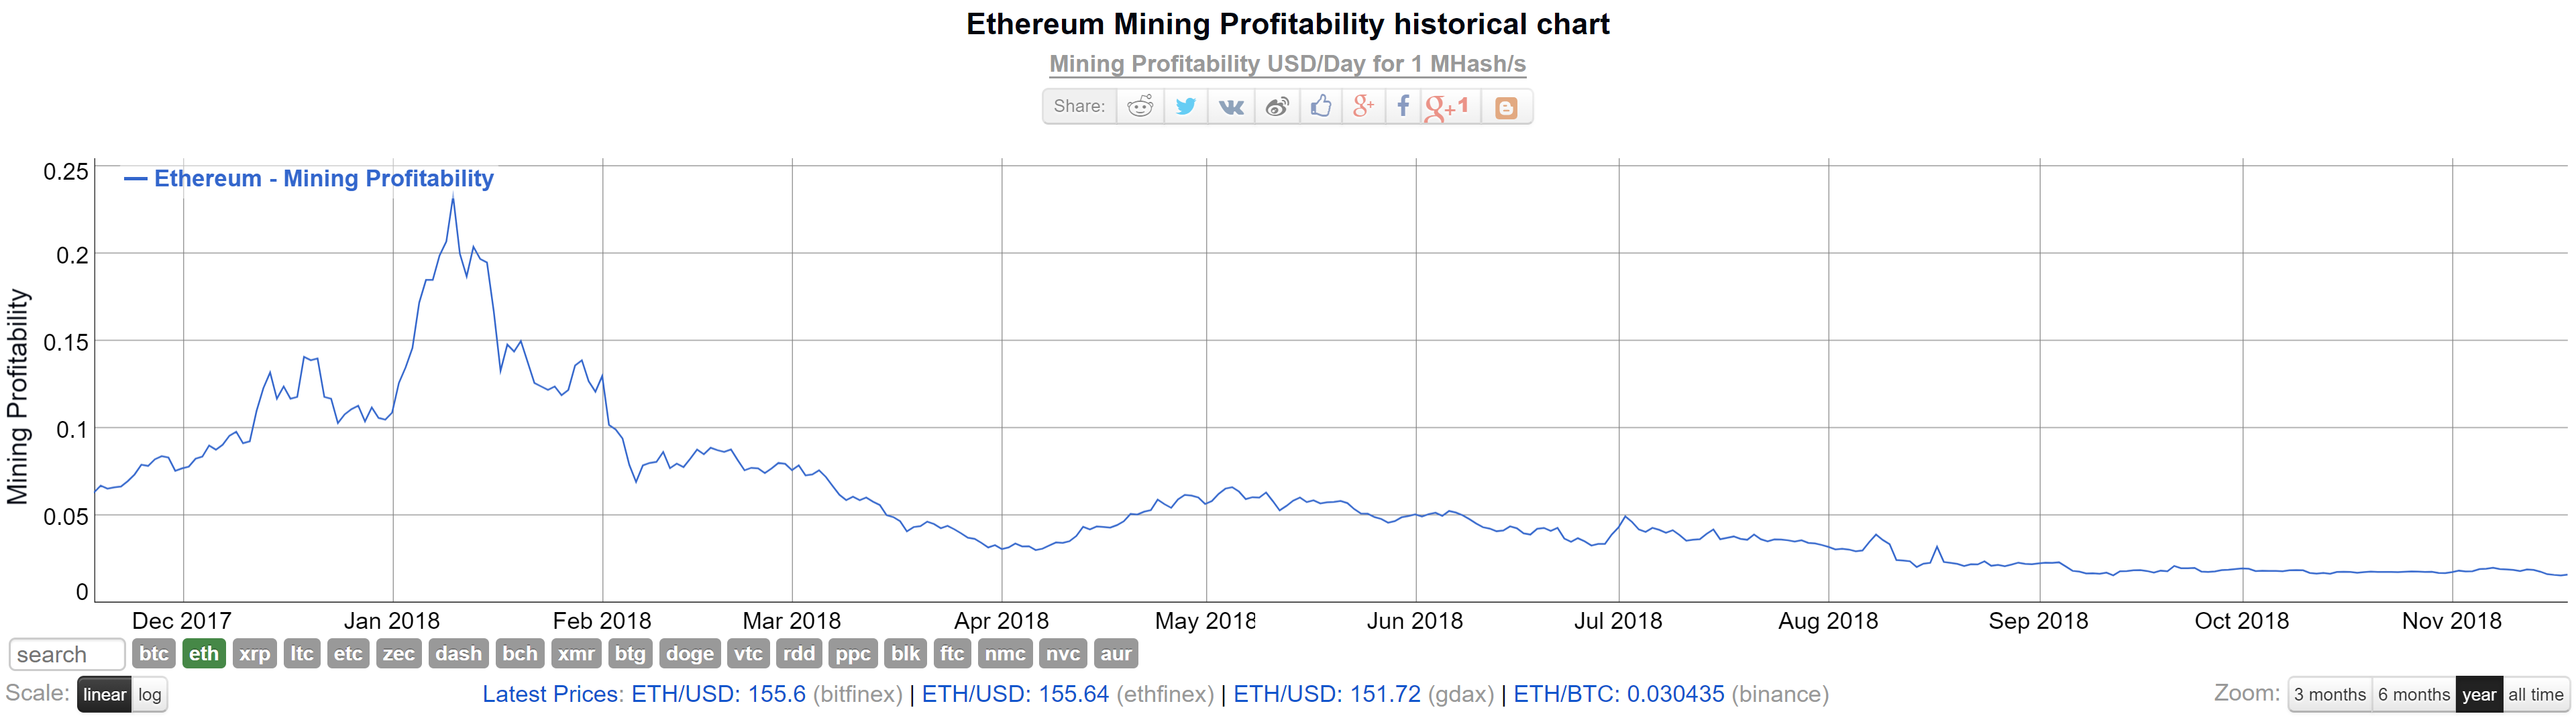 Ethereum Mining Profitability Historical Chart Binance Distribution History Paramonas Villas